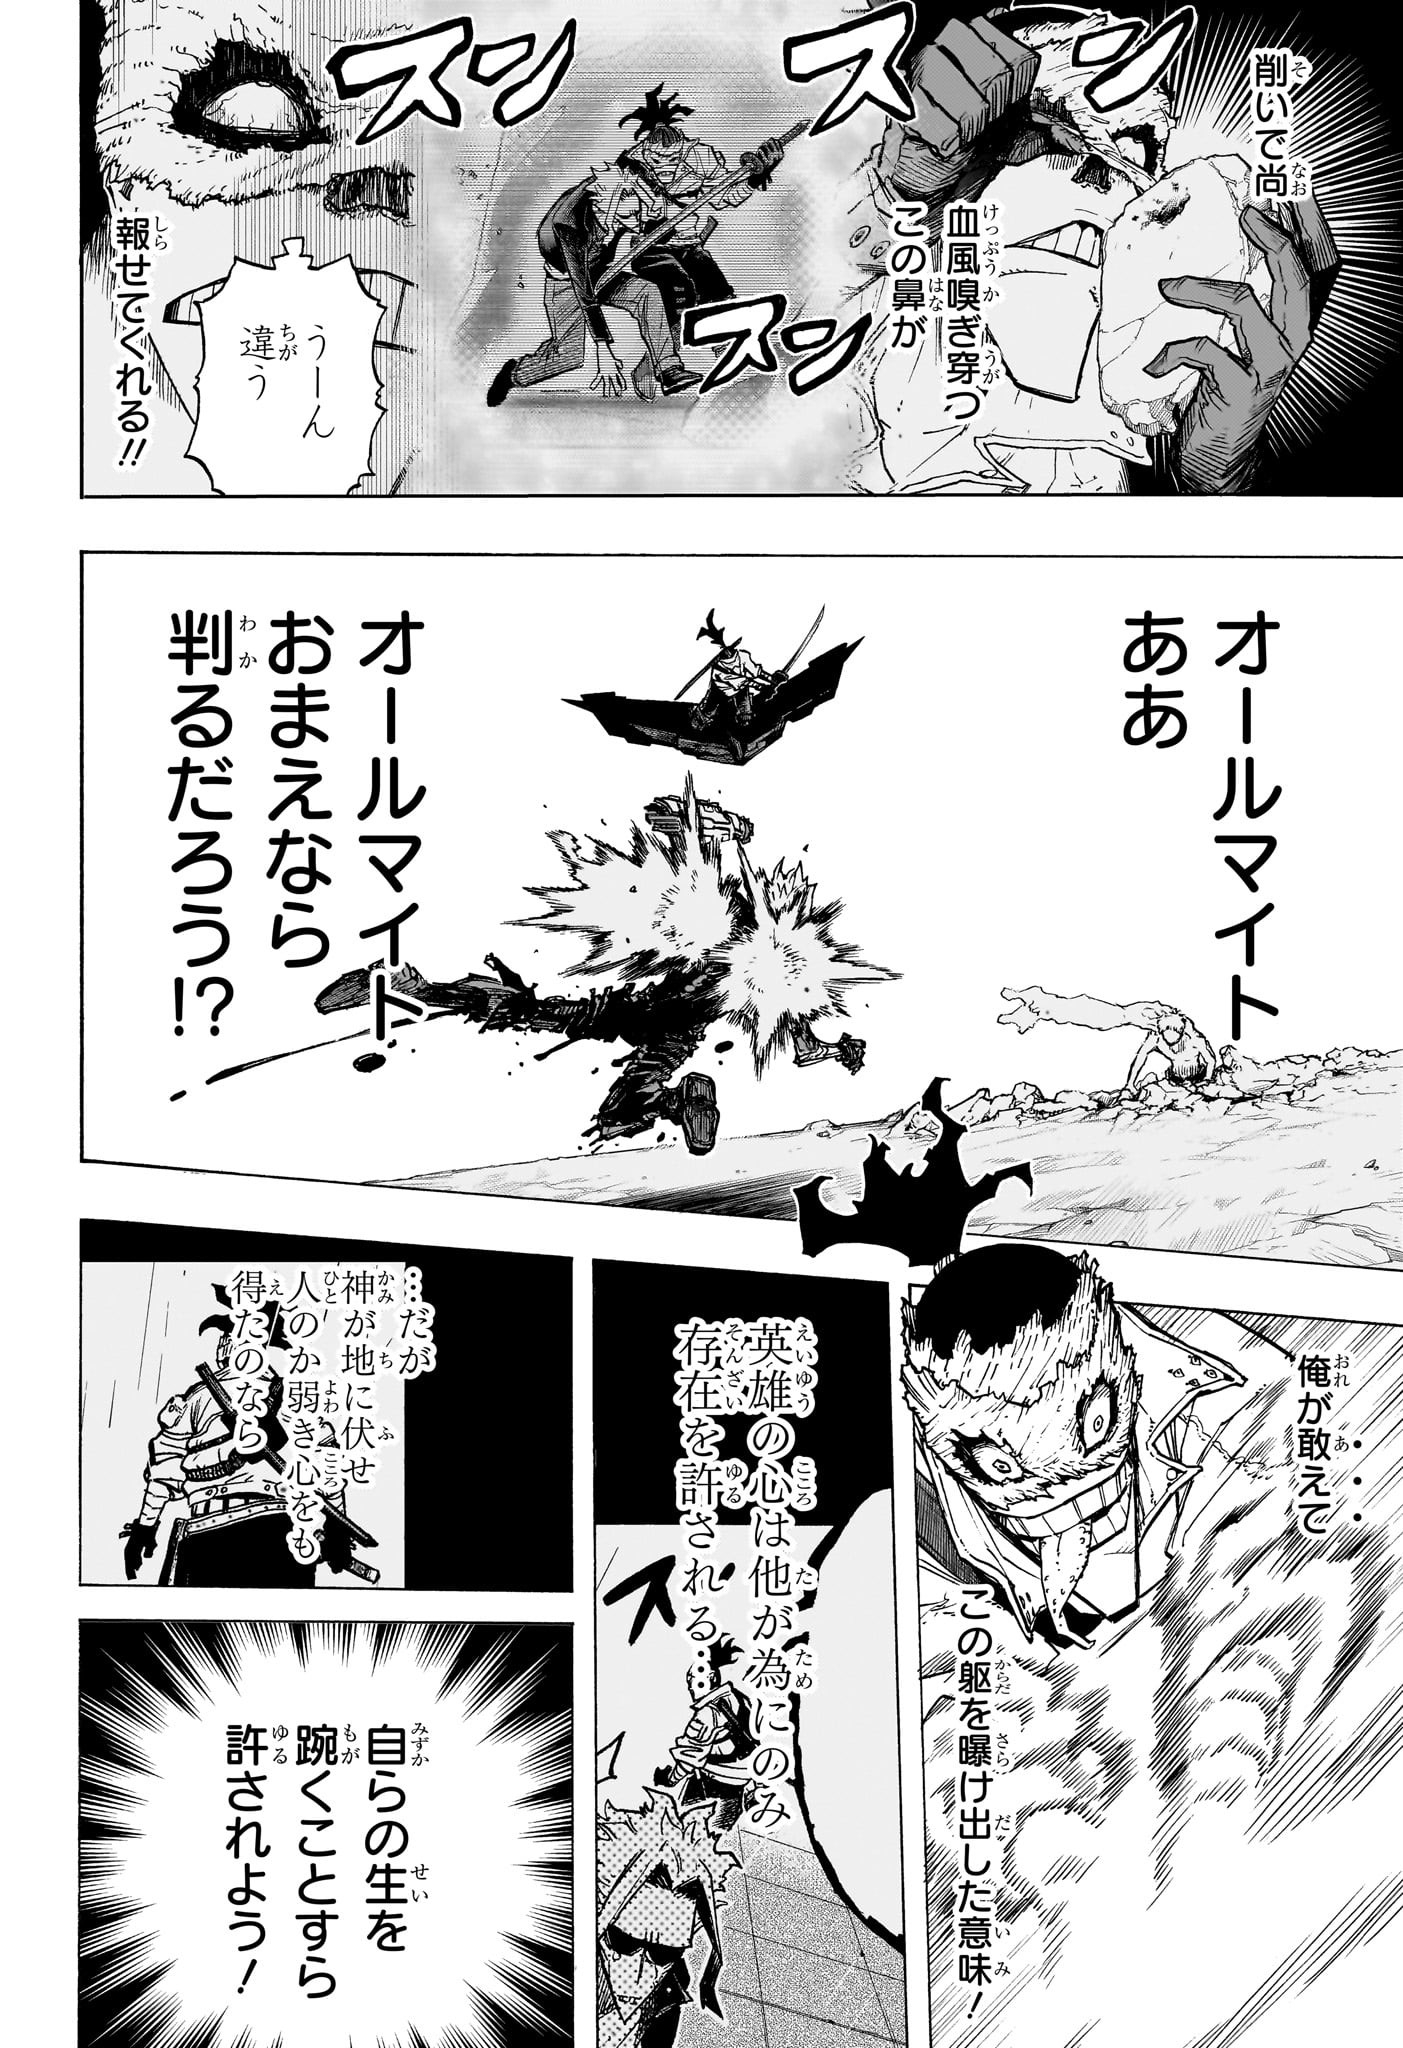 Boku no Hero Academia - Chapter 401 - Page 2